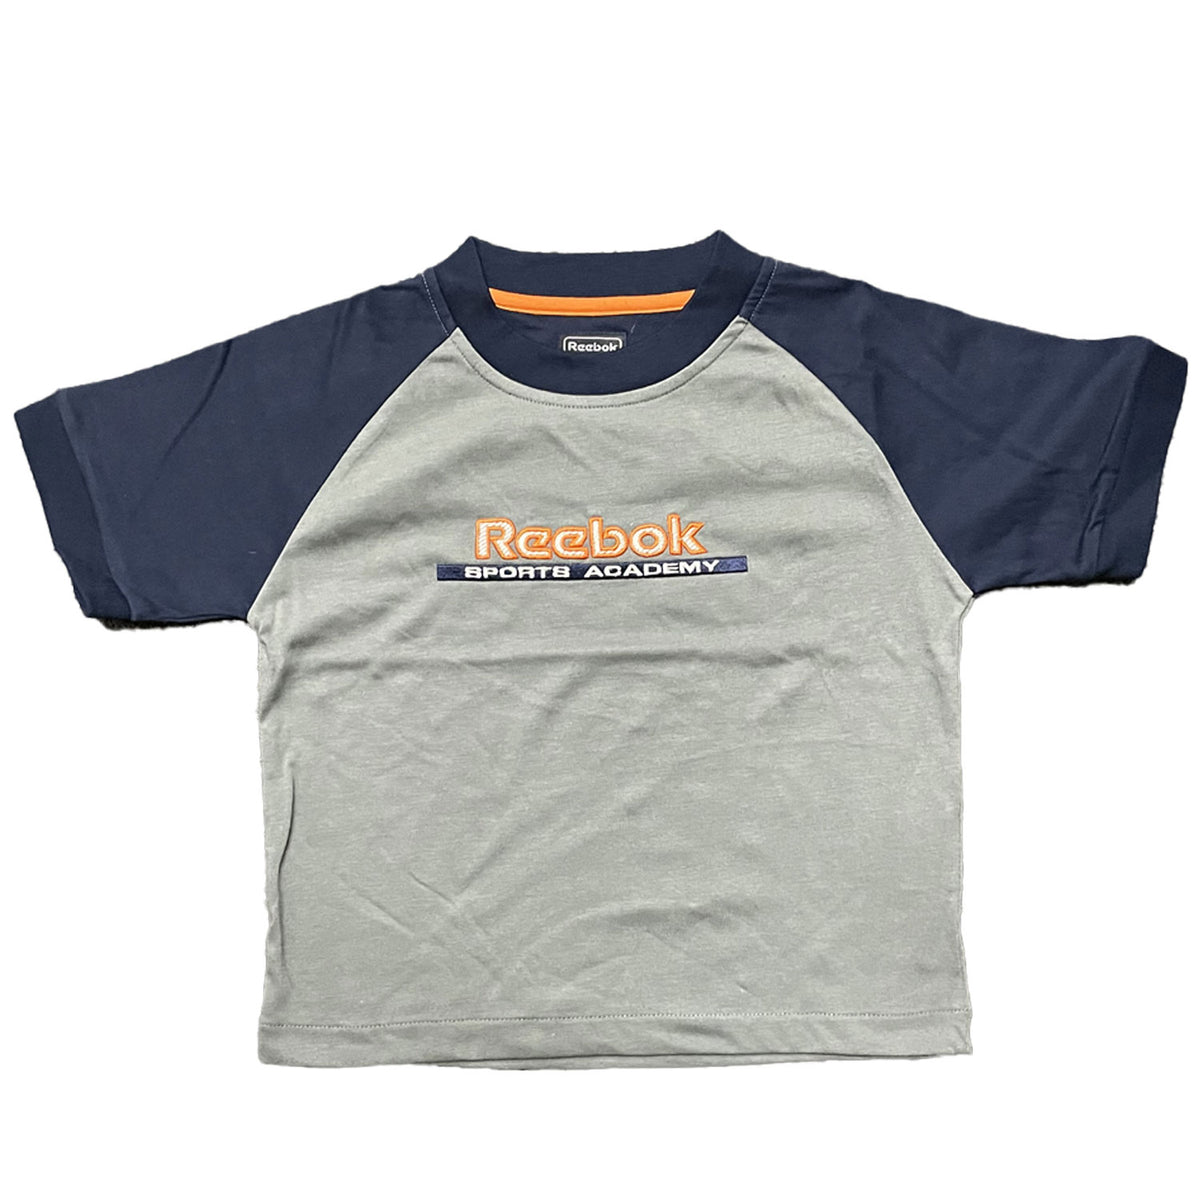 Reebok Sports Academy Infant T-Shirt 2